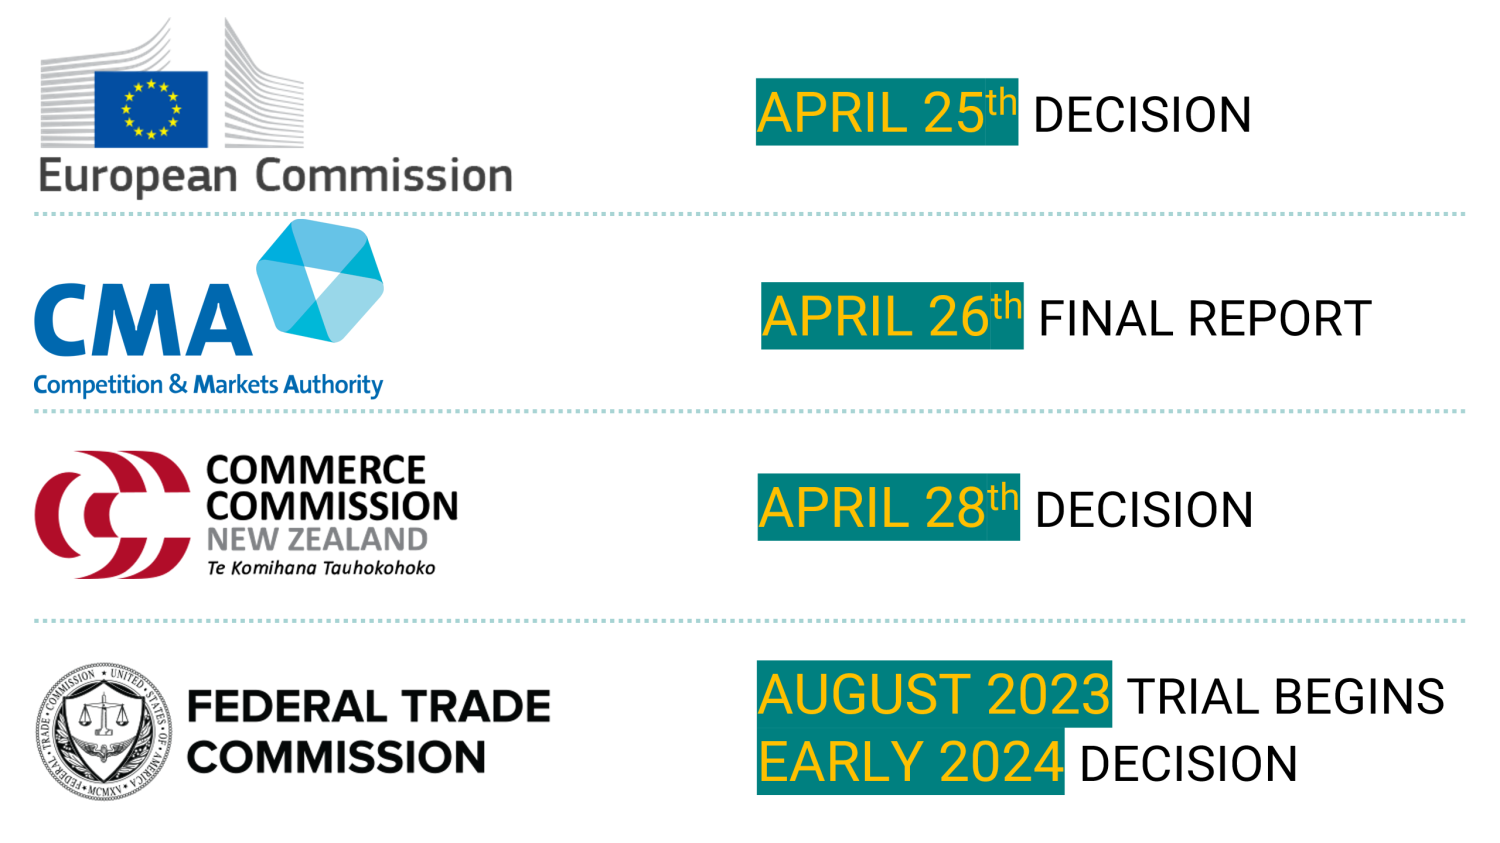 90554 223 european commission delays activision merger decision deadline full  Image of 90554 223 european commission delays activision merger decision deadline full